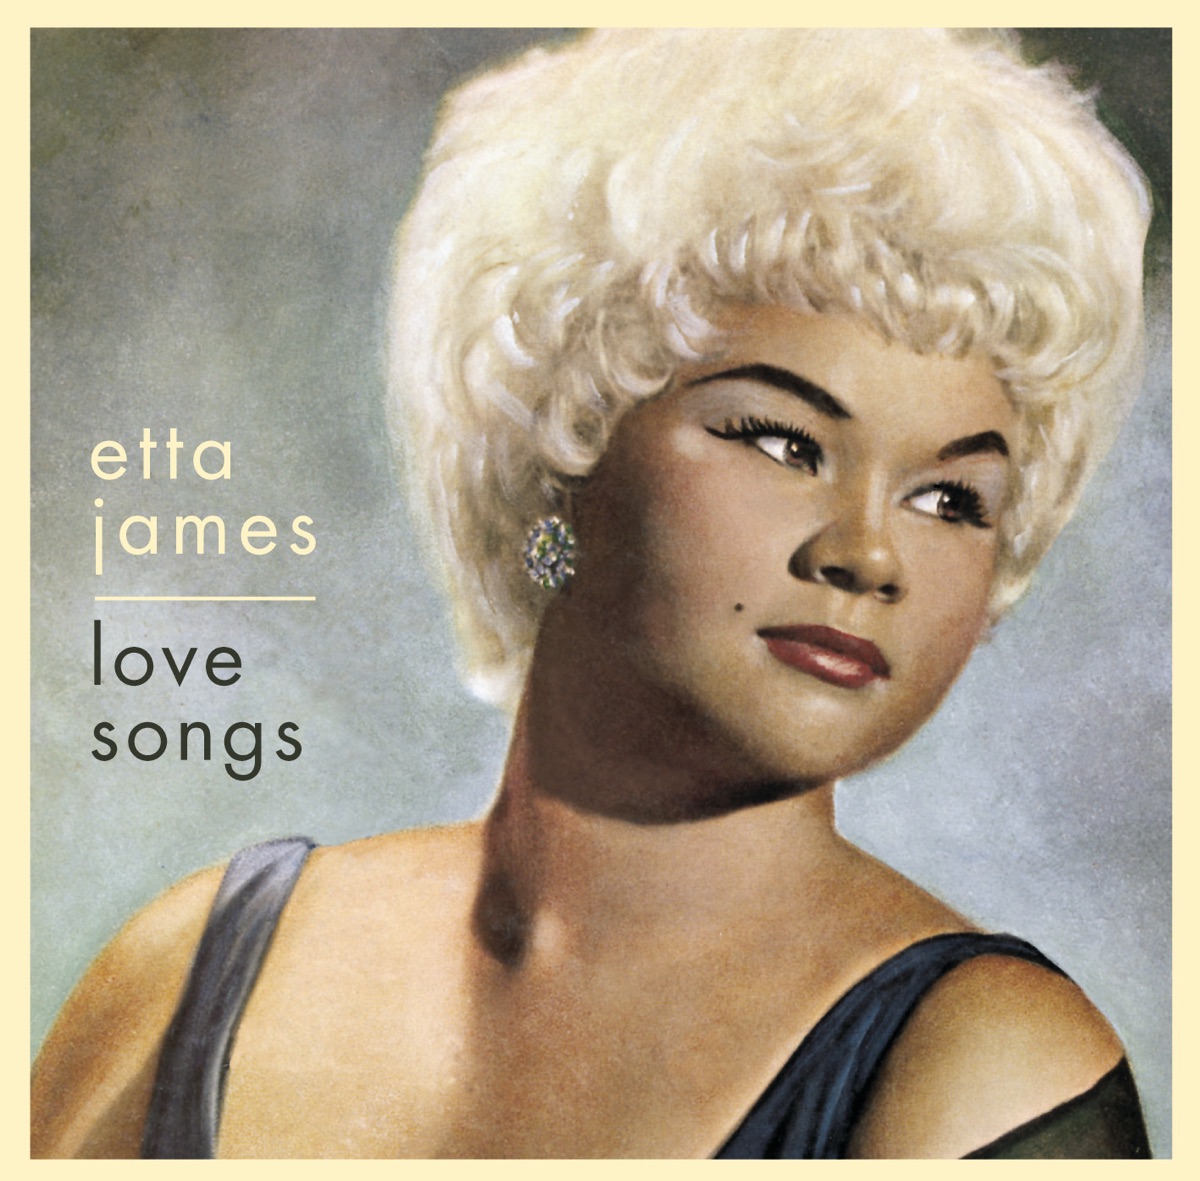 Love Songs - Album by Etta James - Apple Music